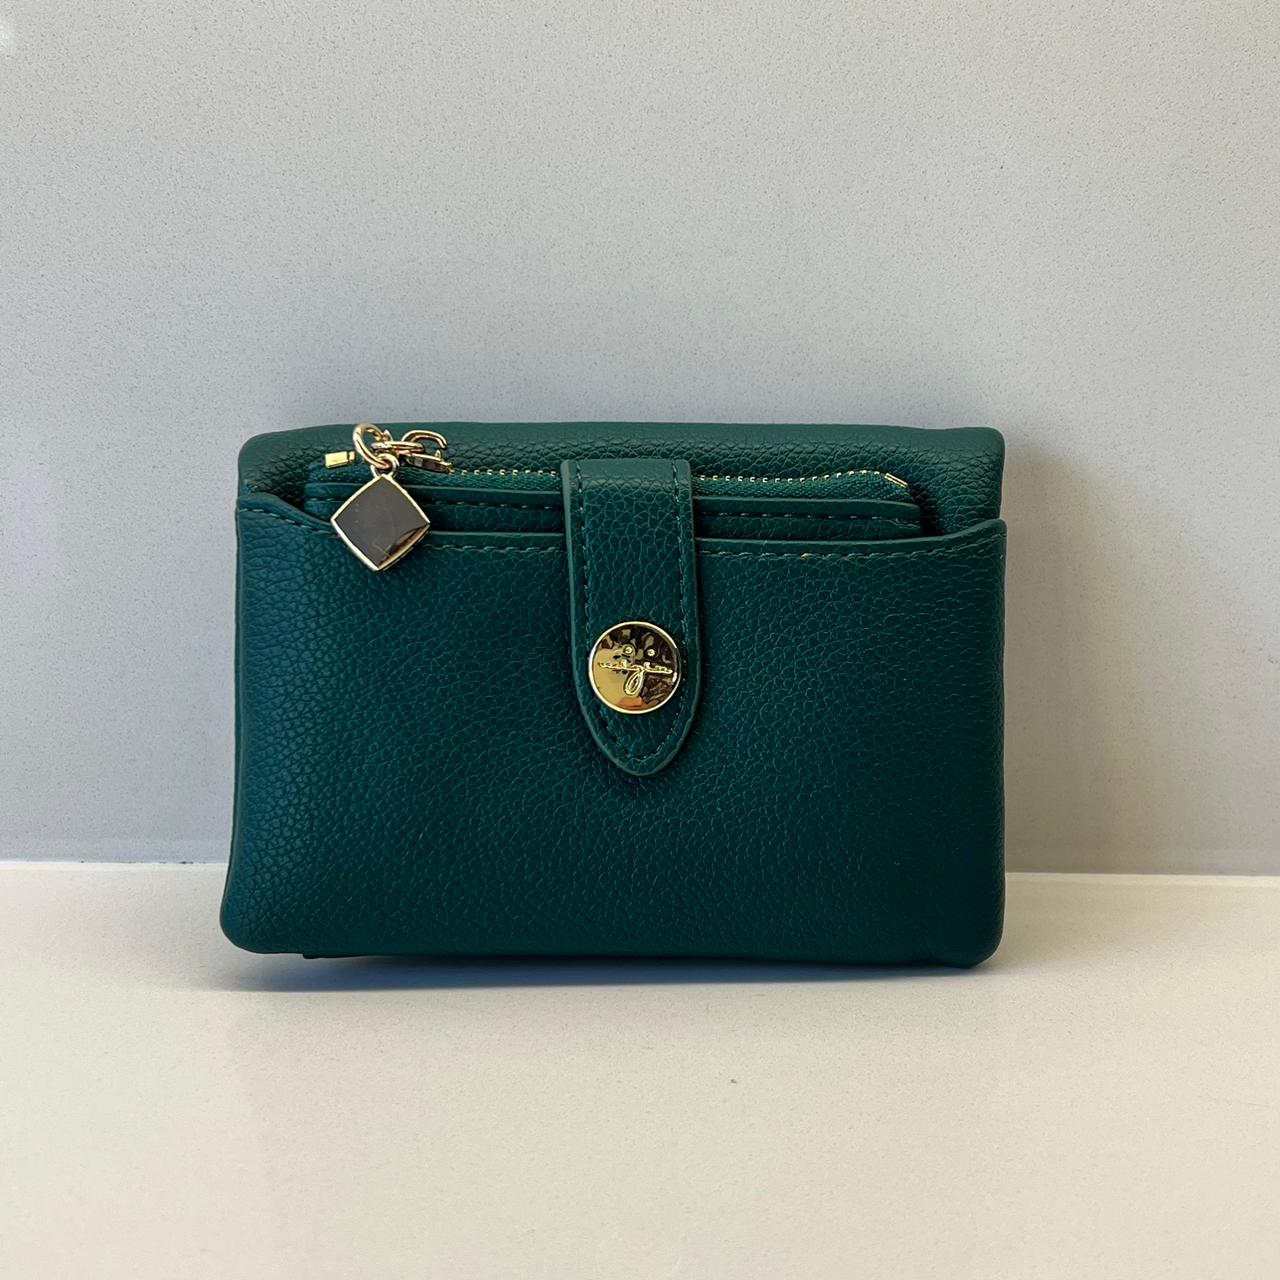 Suprene Bags Wallet Green The Bella Wallet